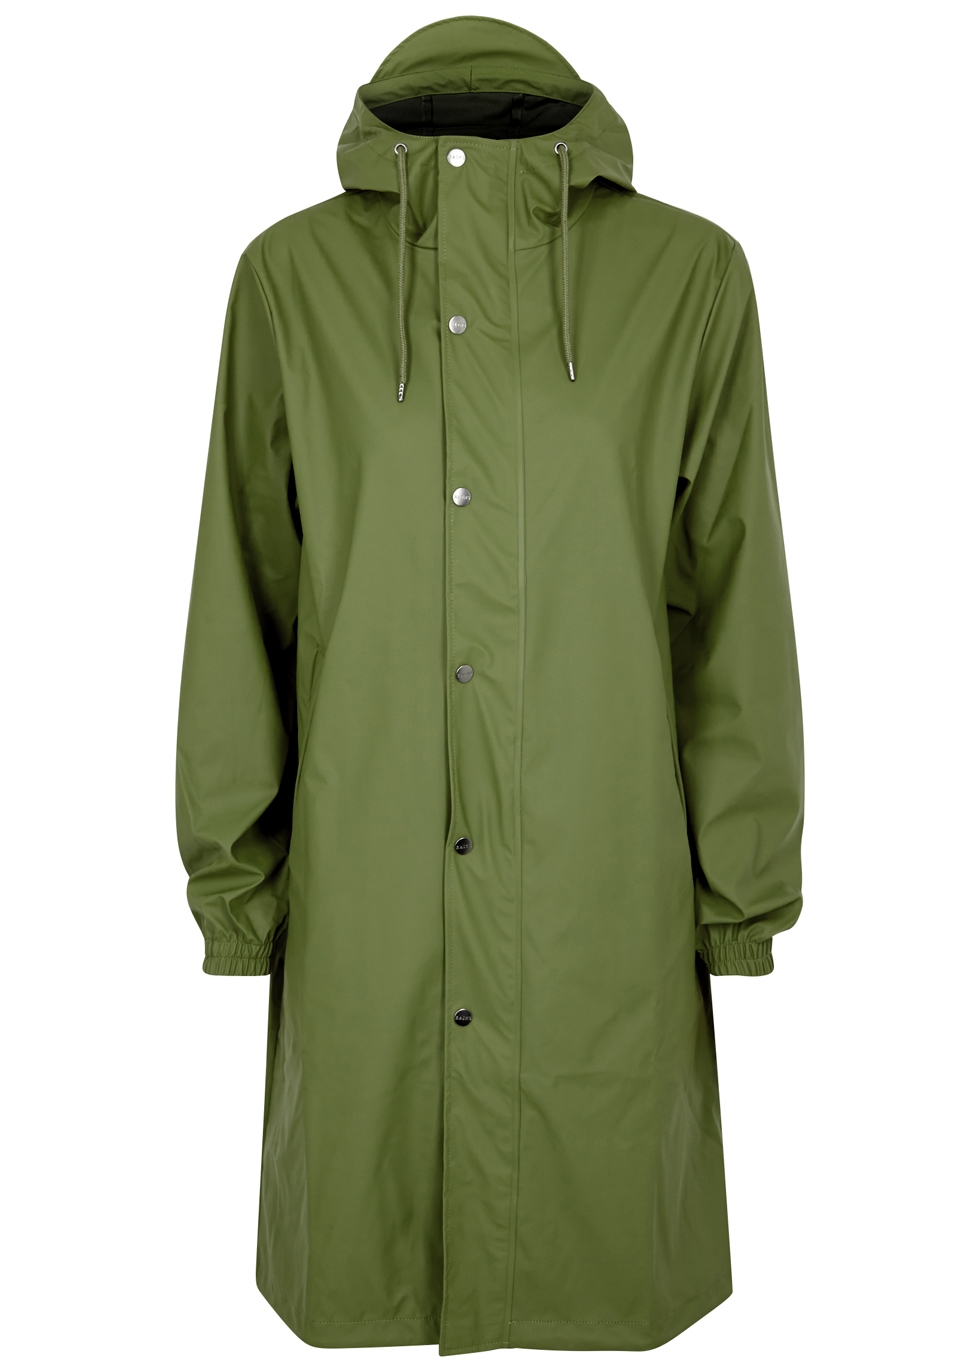 green raincoat with hood